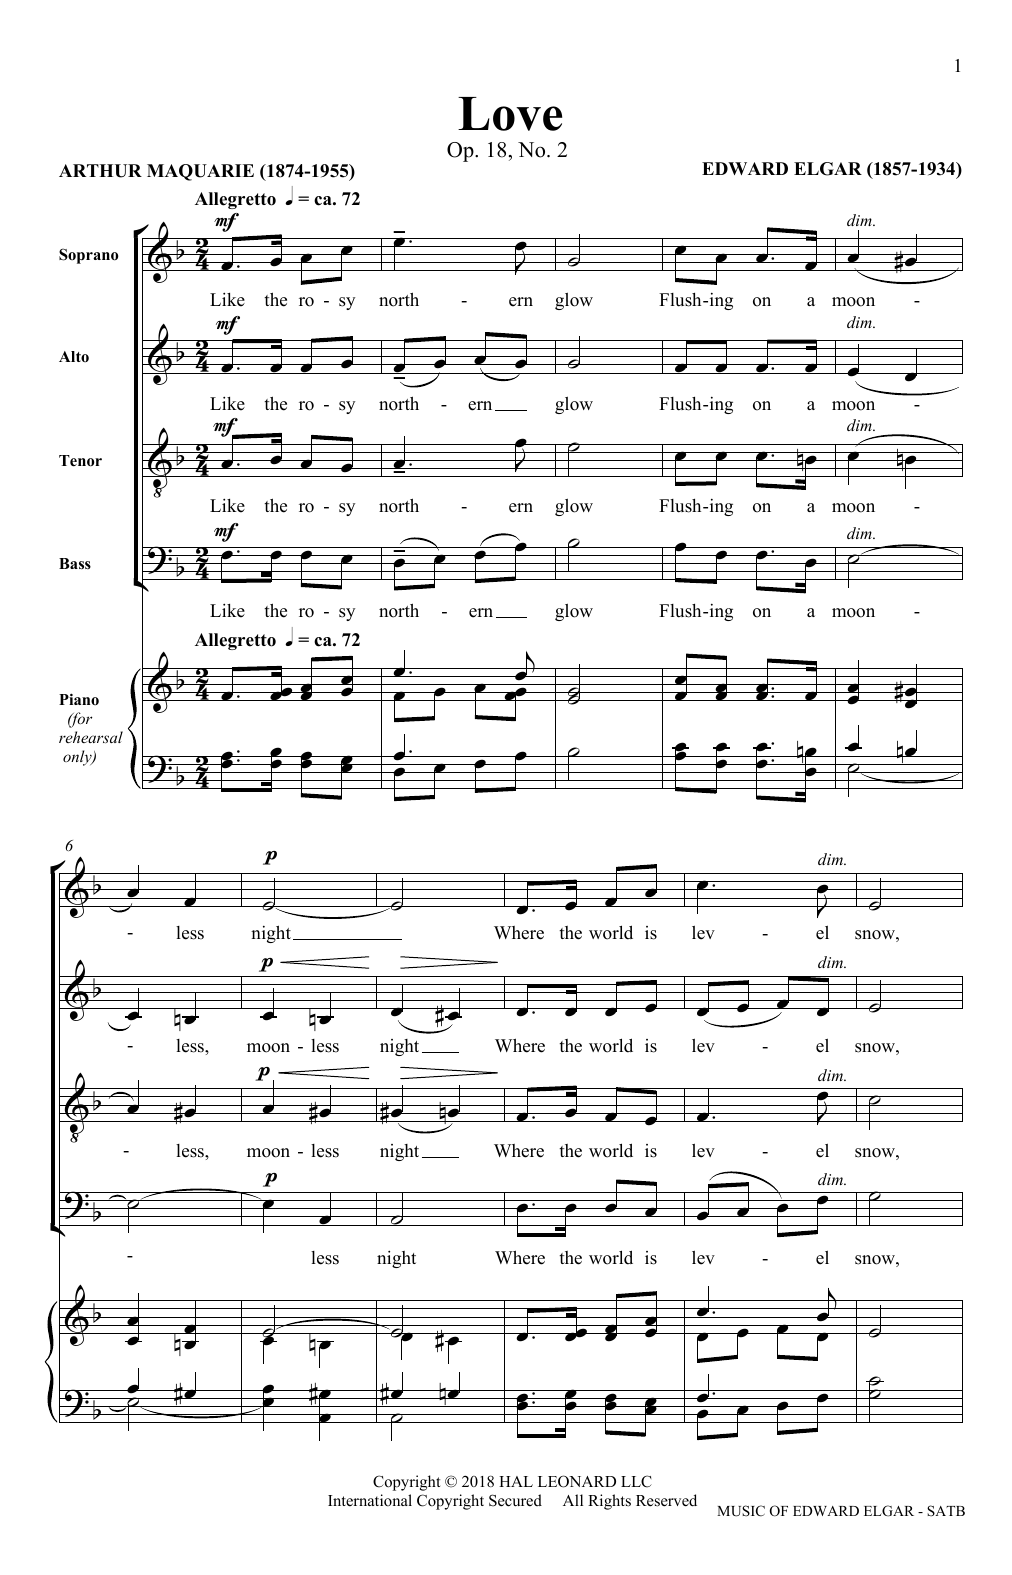 Edward Elgar Love (arr. Philip Lawson) Sheet Music Notes & Chords for SATB Choir - Download or Print PDF